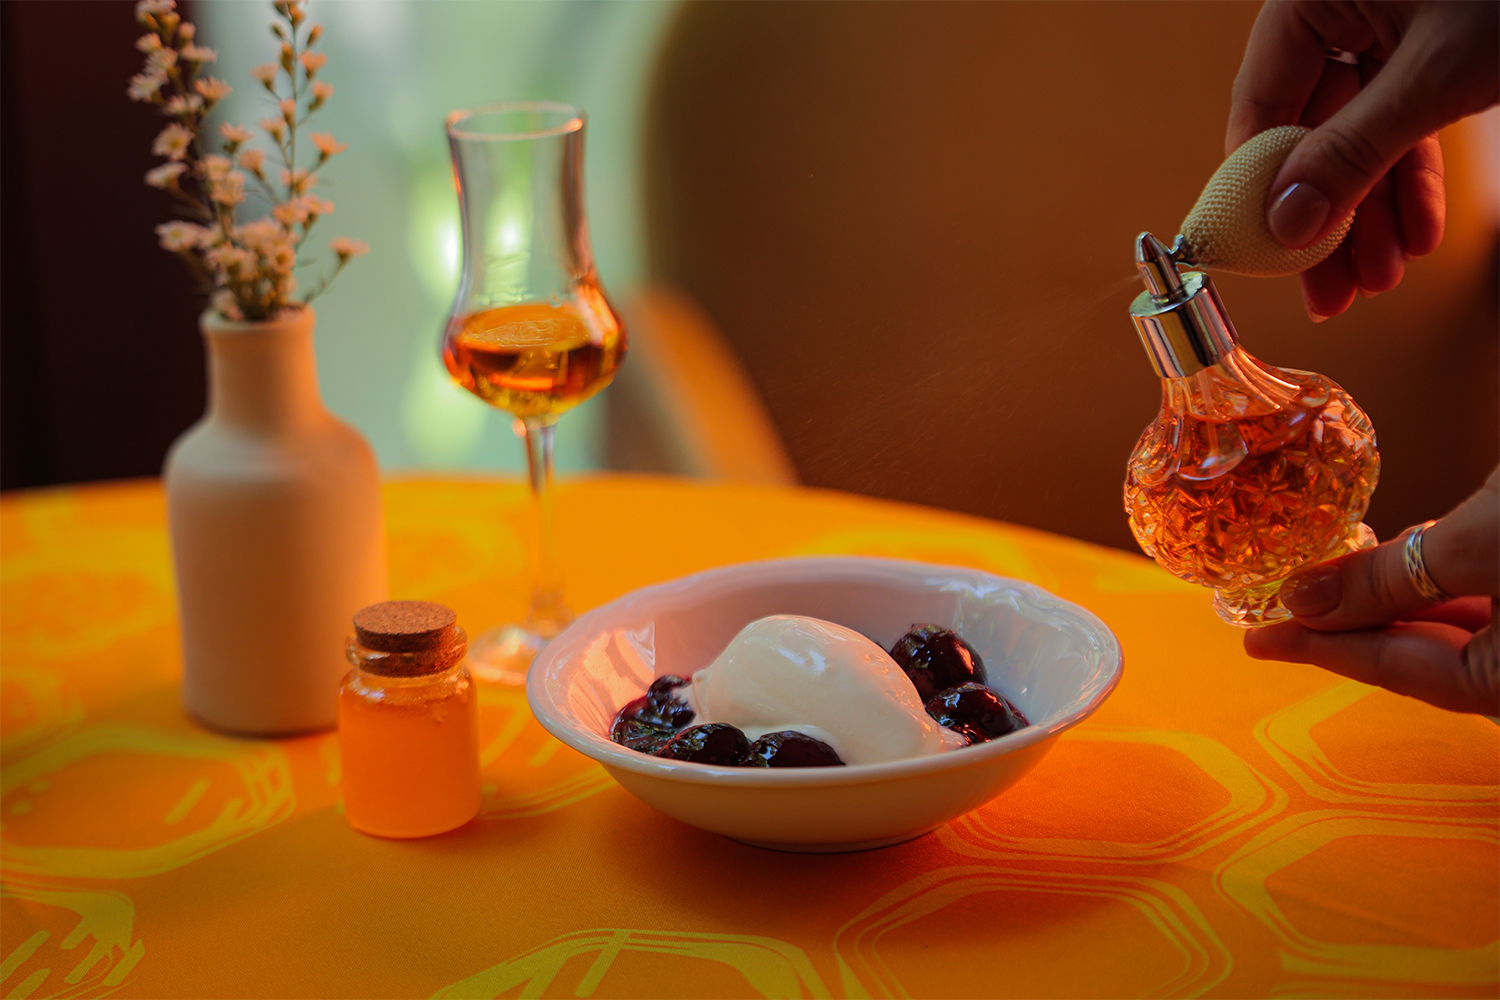 ARARAT Honey: The “romance” of brandy and honey